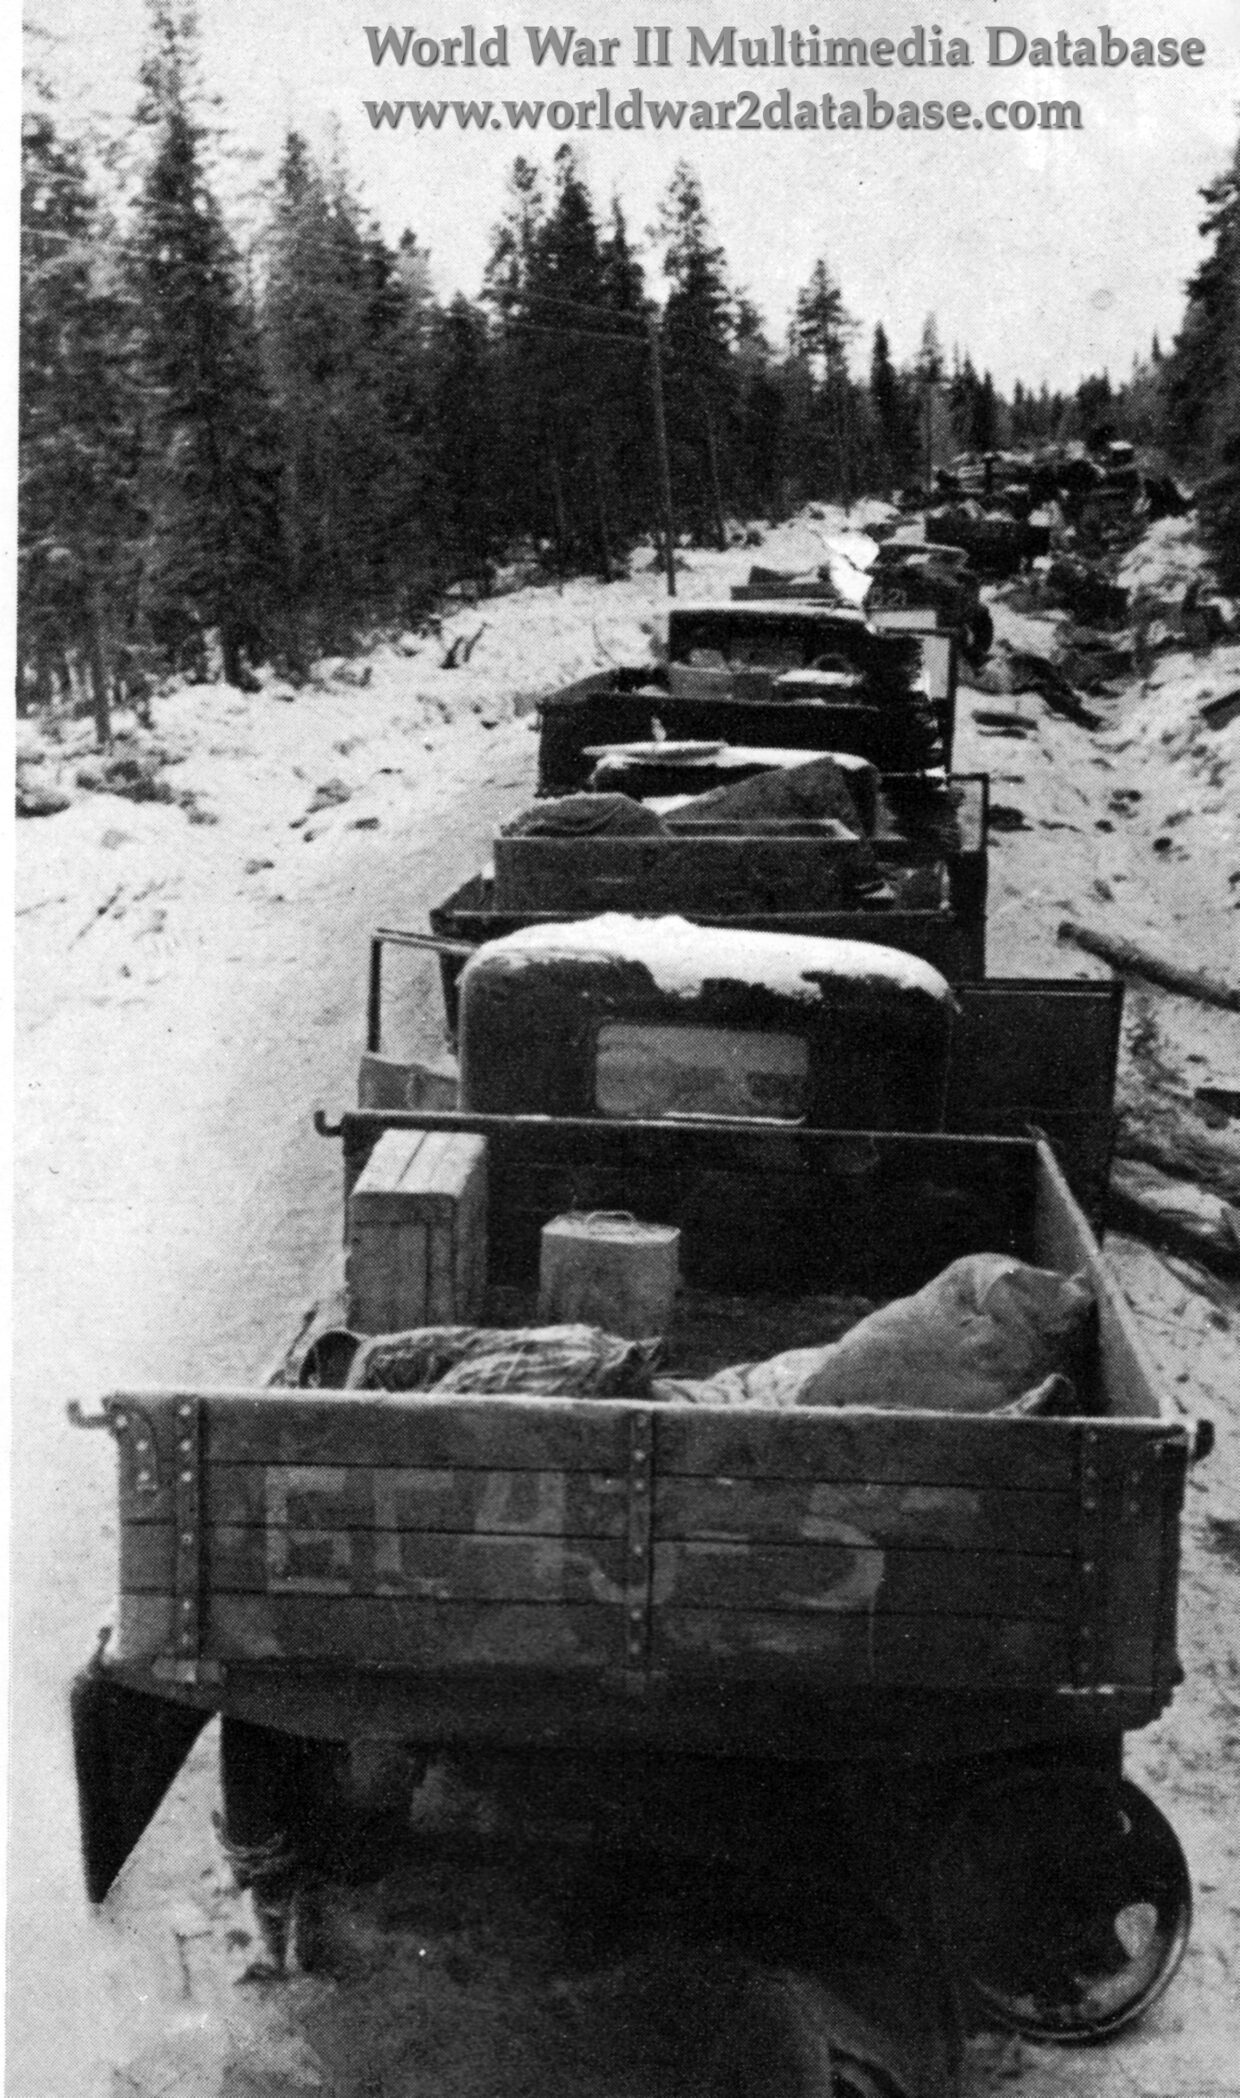 Soviet Trucks Abandoned On the Kemi-Salla Road